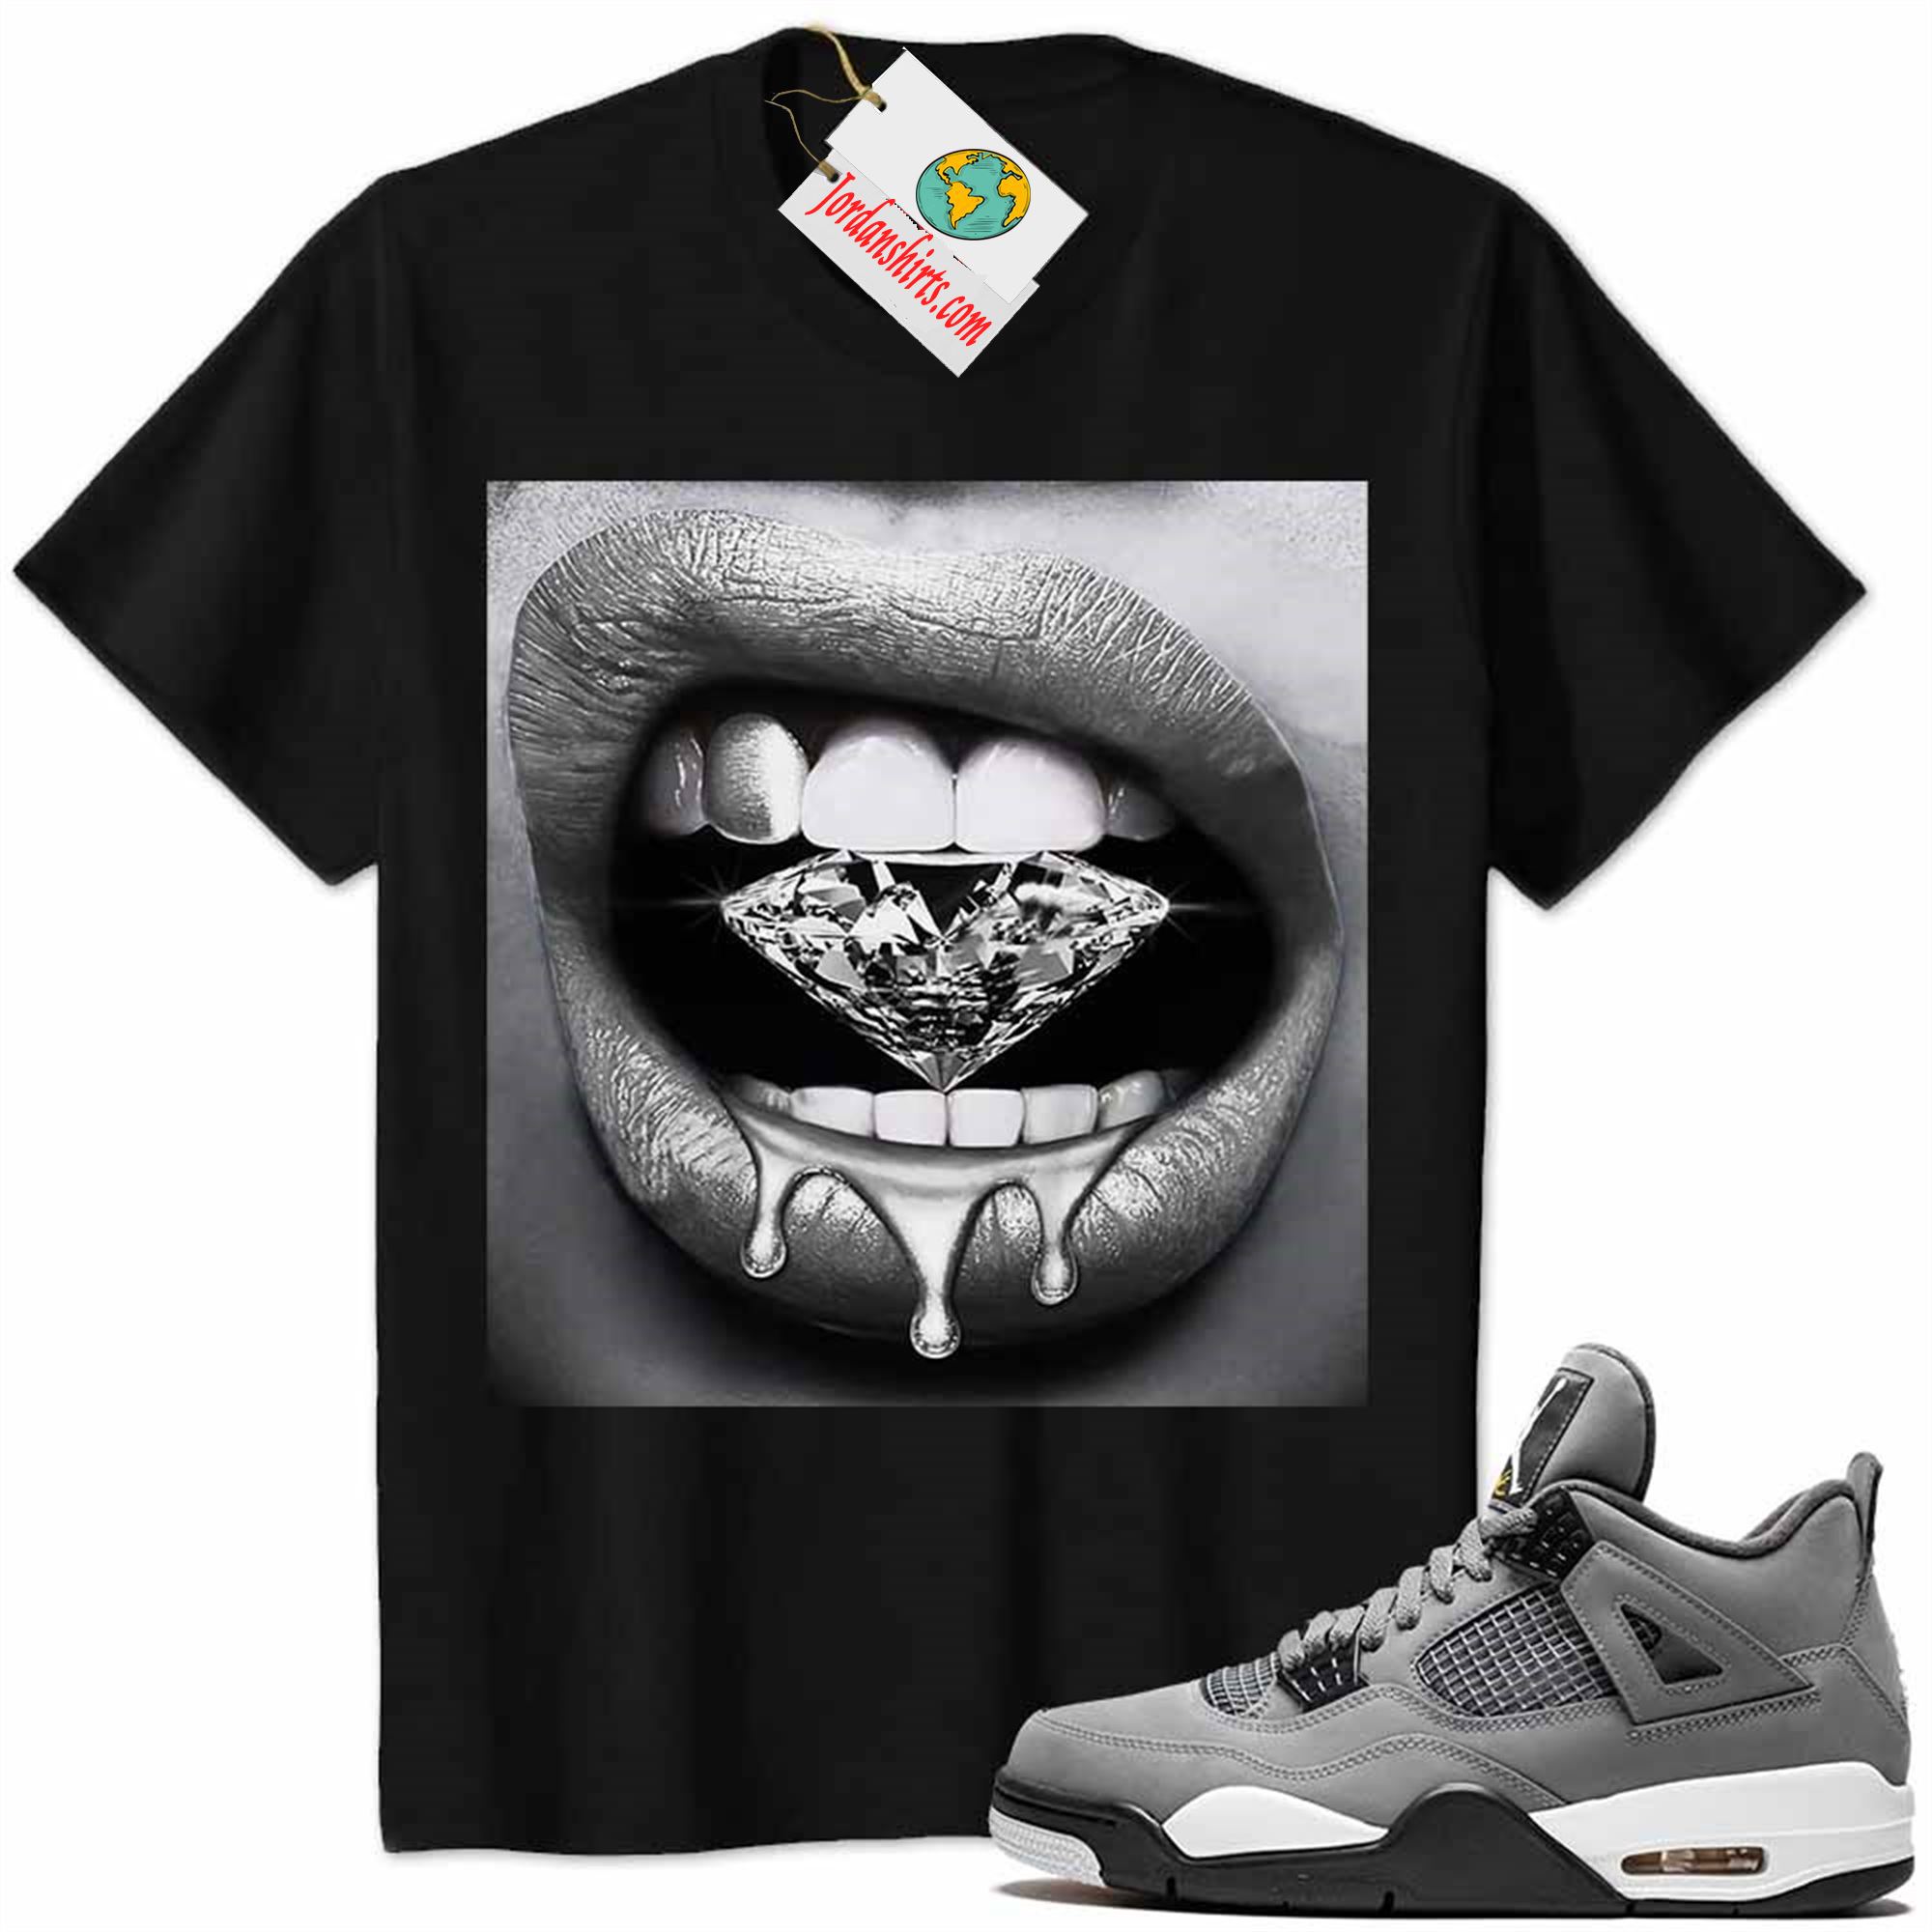 Jordan 4 Shirt, Jordan 4 Cool Grey Shirt Sexy Lip Bite Diamond Dripping Black Full Size Up To 5xl